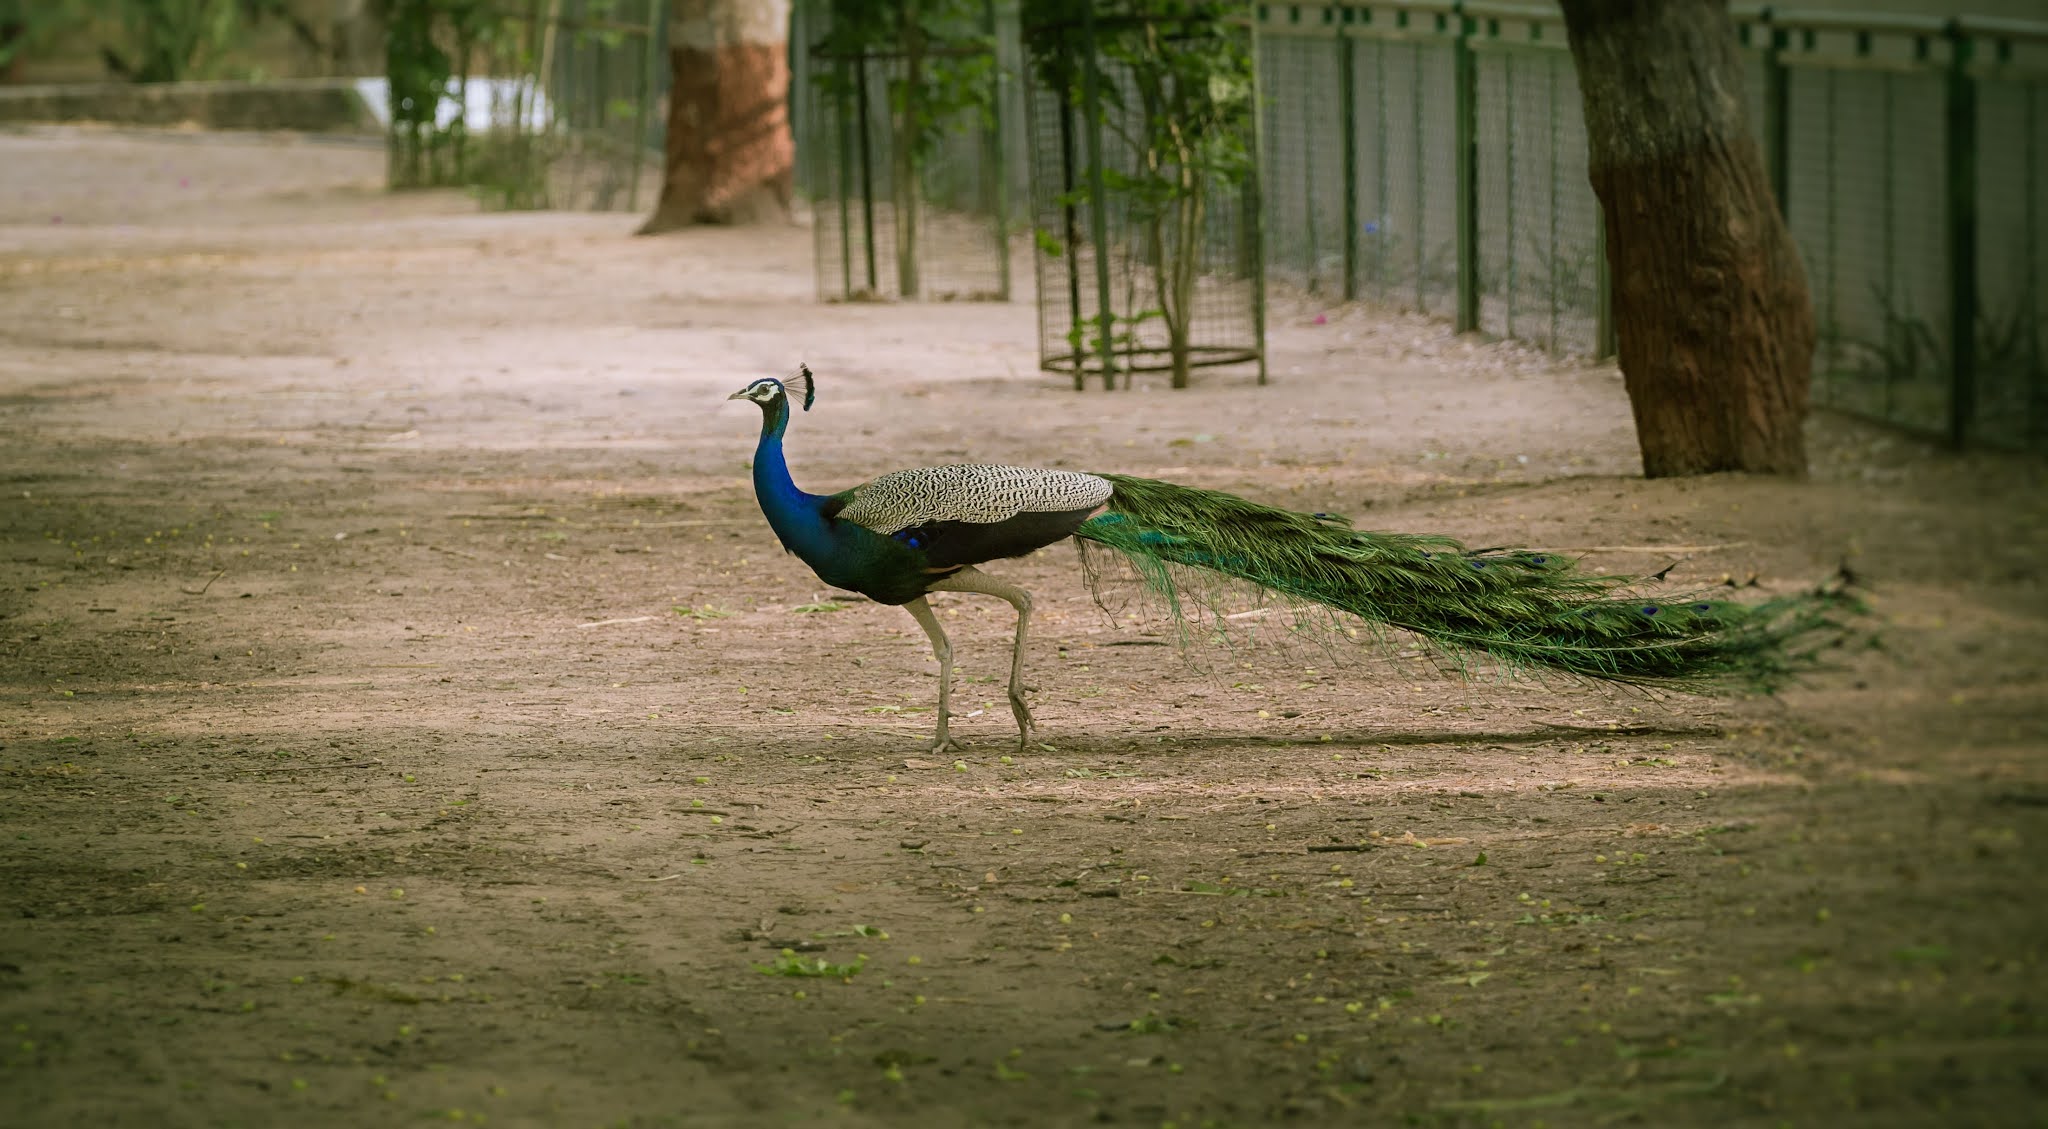 Peacock: An Unmistakable, Large Ground Bird